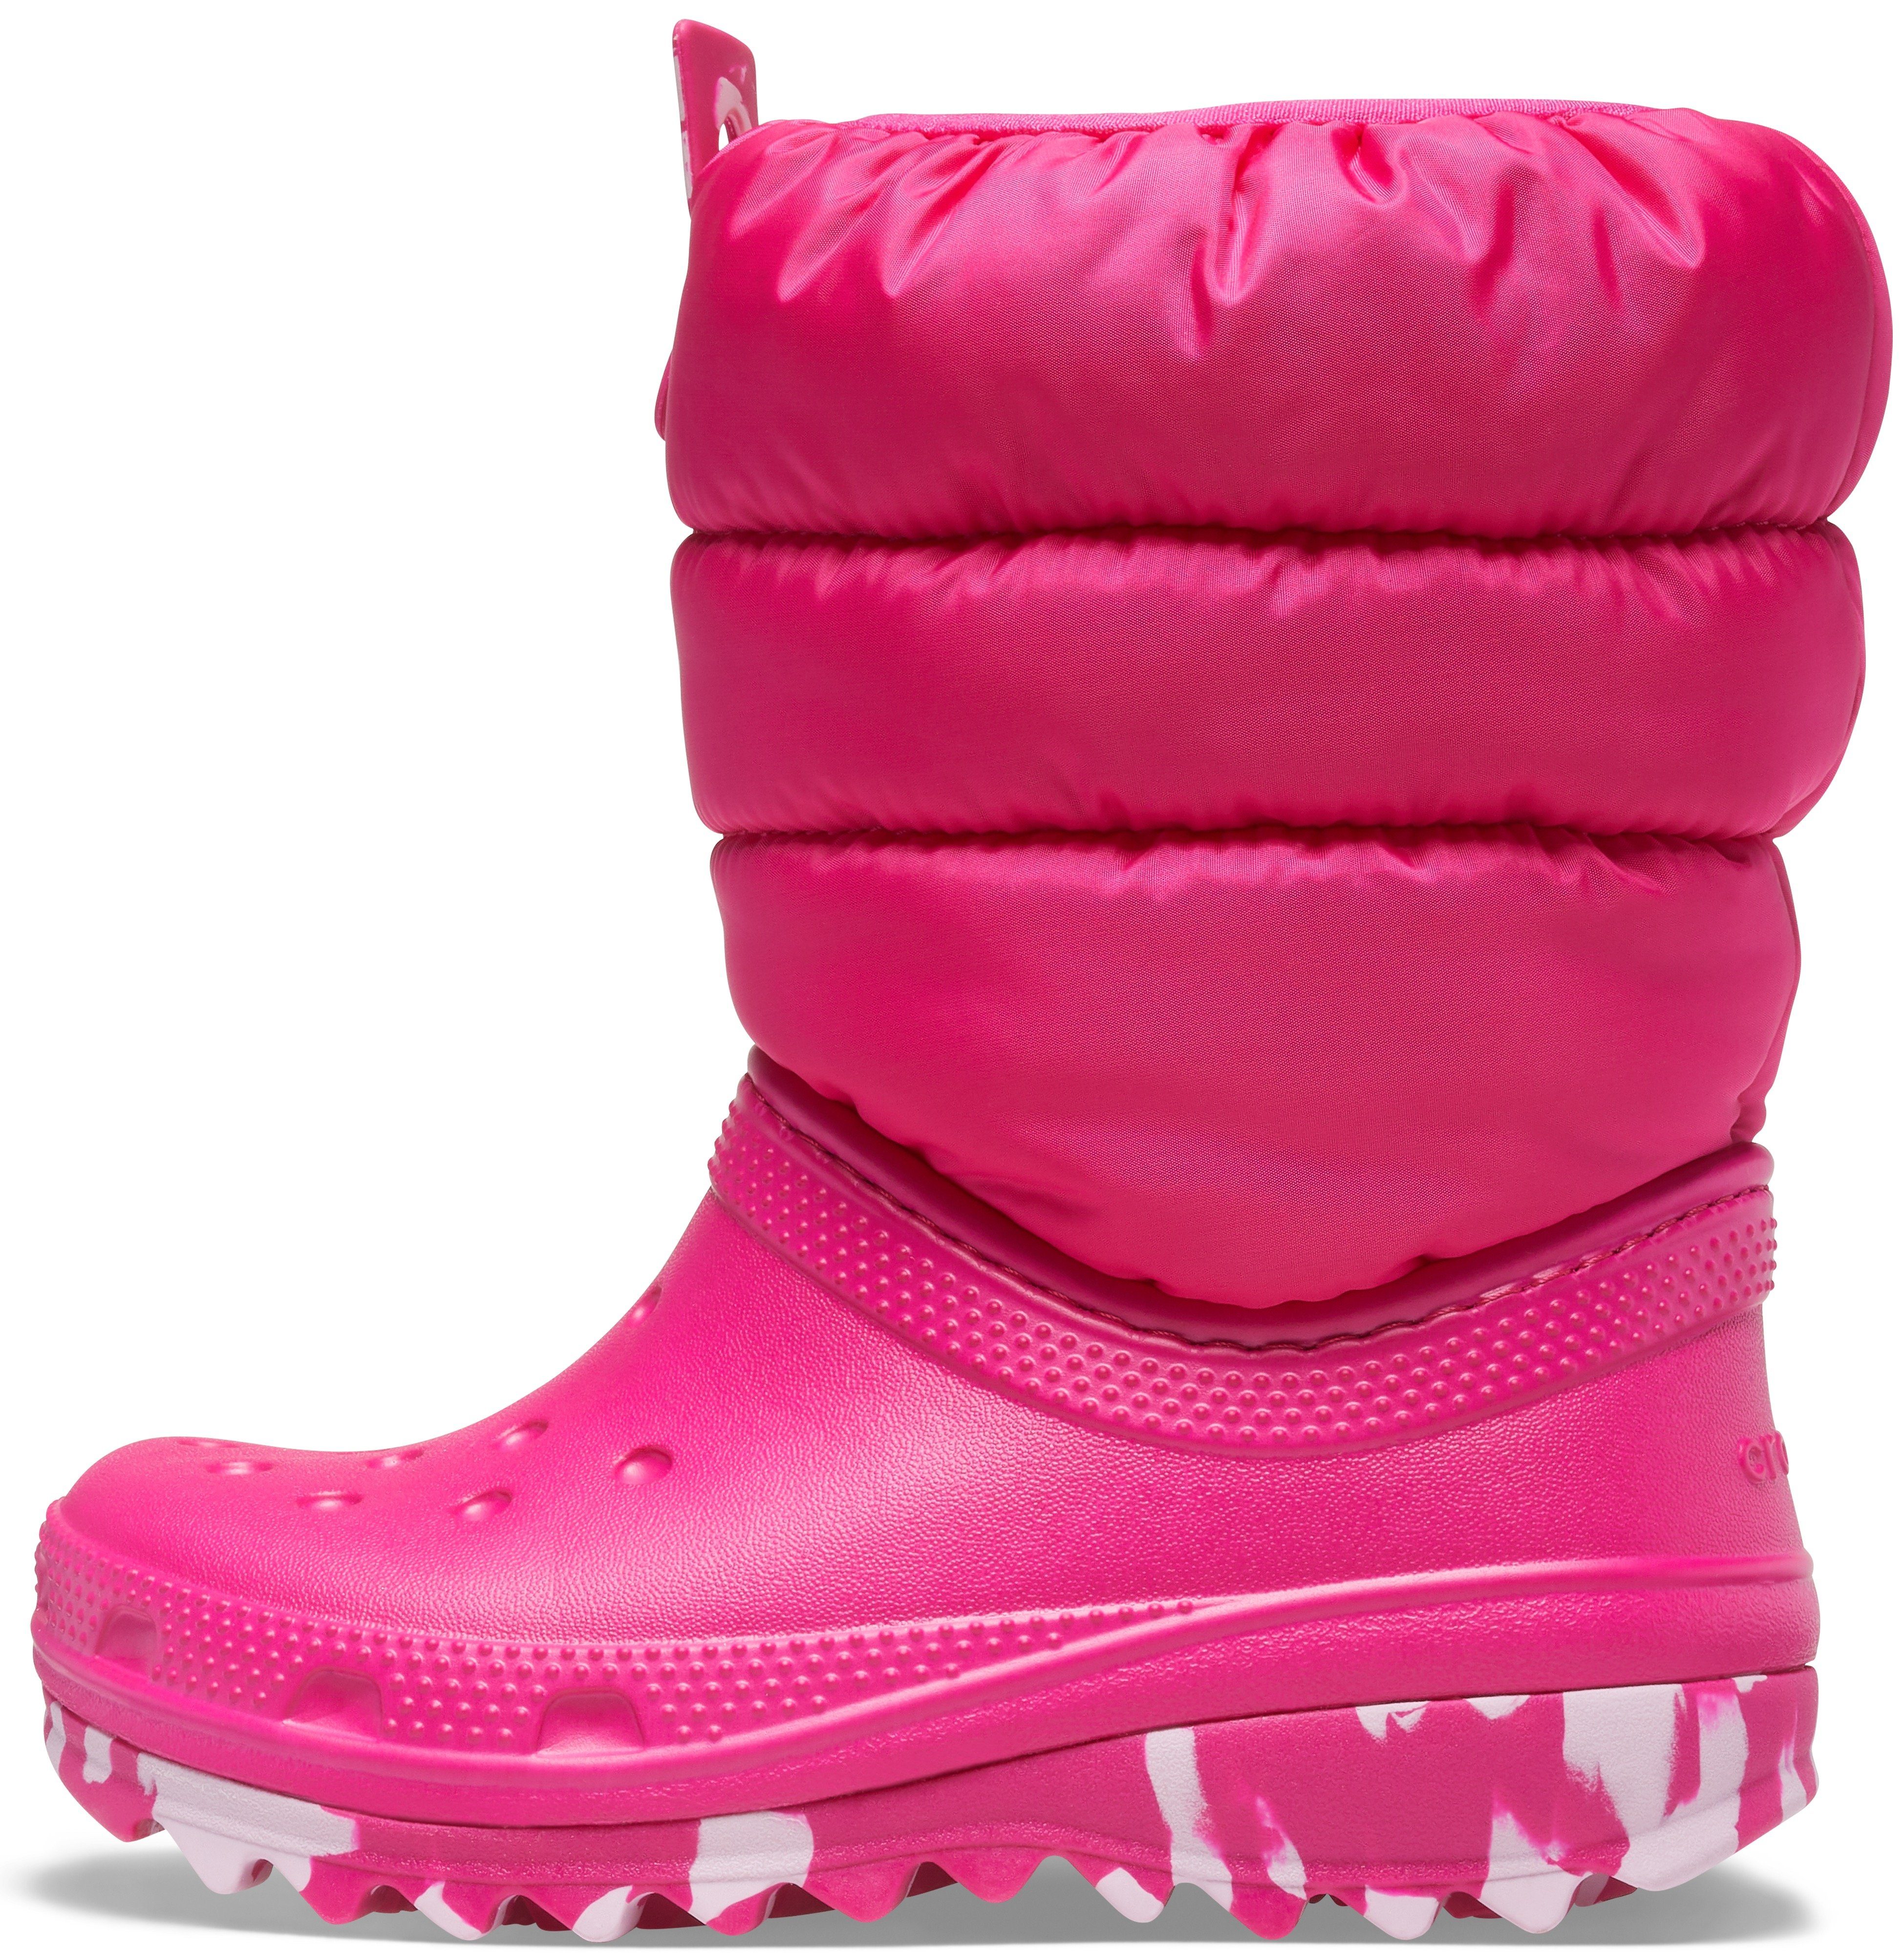 K CLASSIC Schlupfen BOOT Crocs Winterboots pink-kombiniert NEO zum PUFF